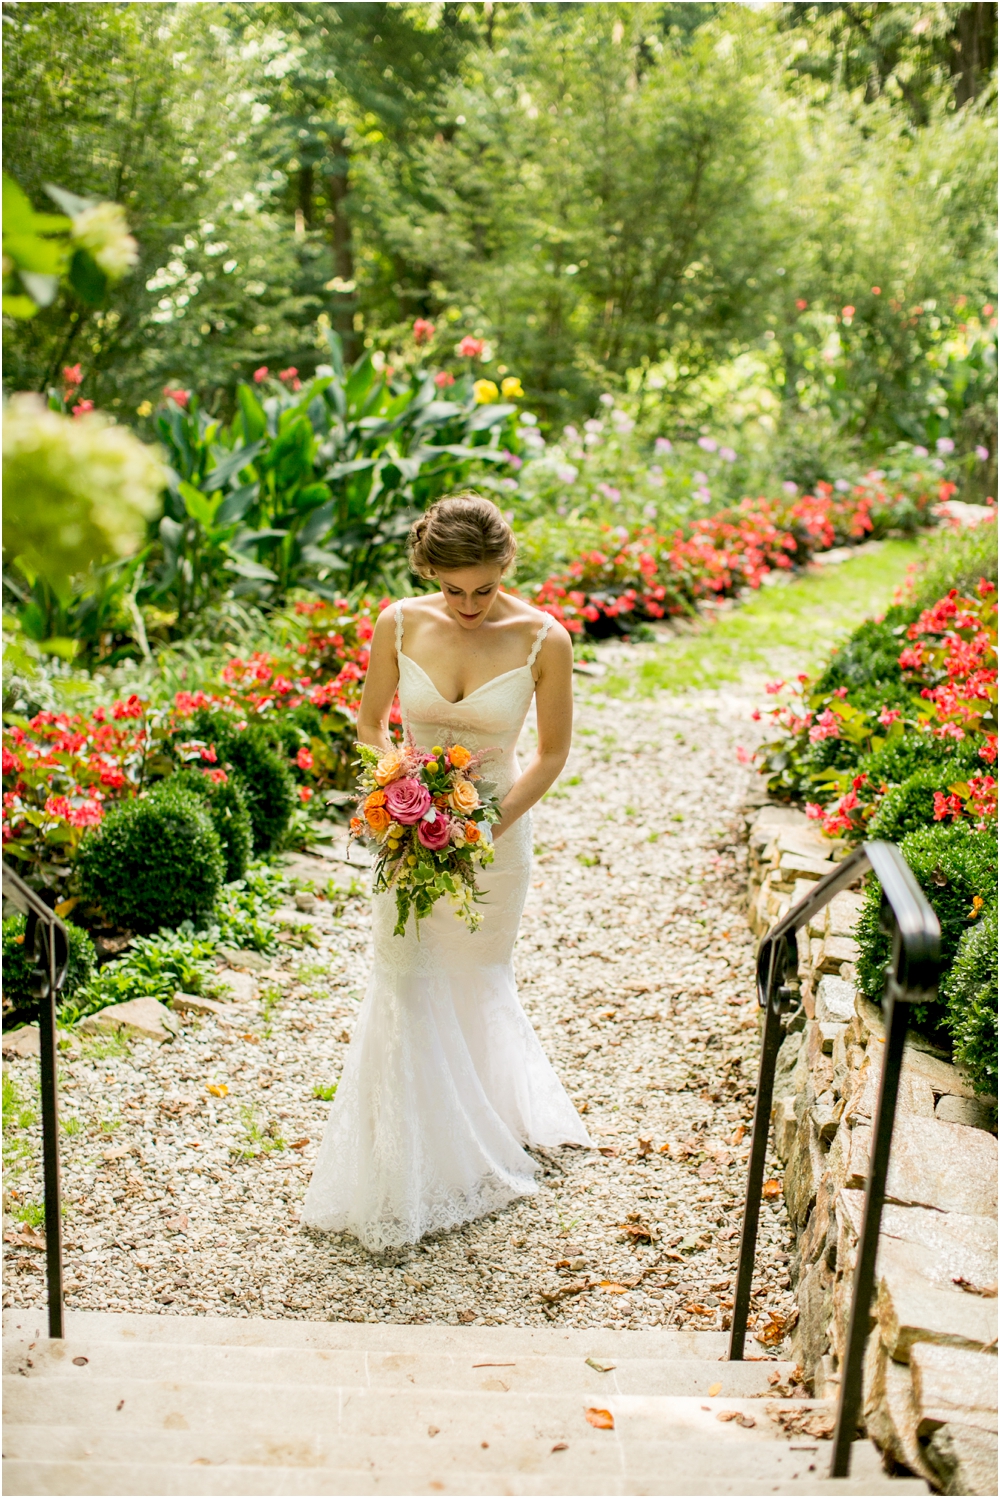 daniel chrissy gramercy mansion outdoor garden wedding living radiant photography_0035.jpg